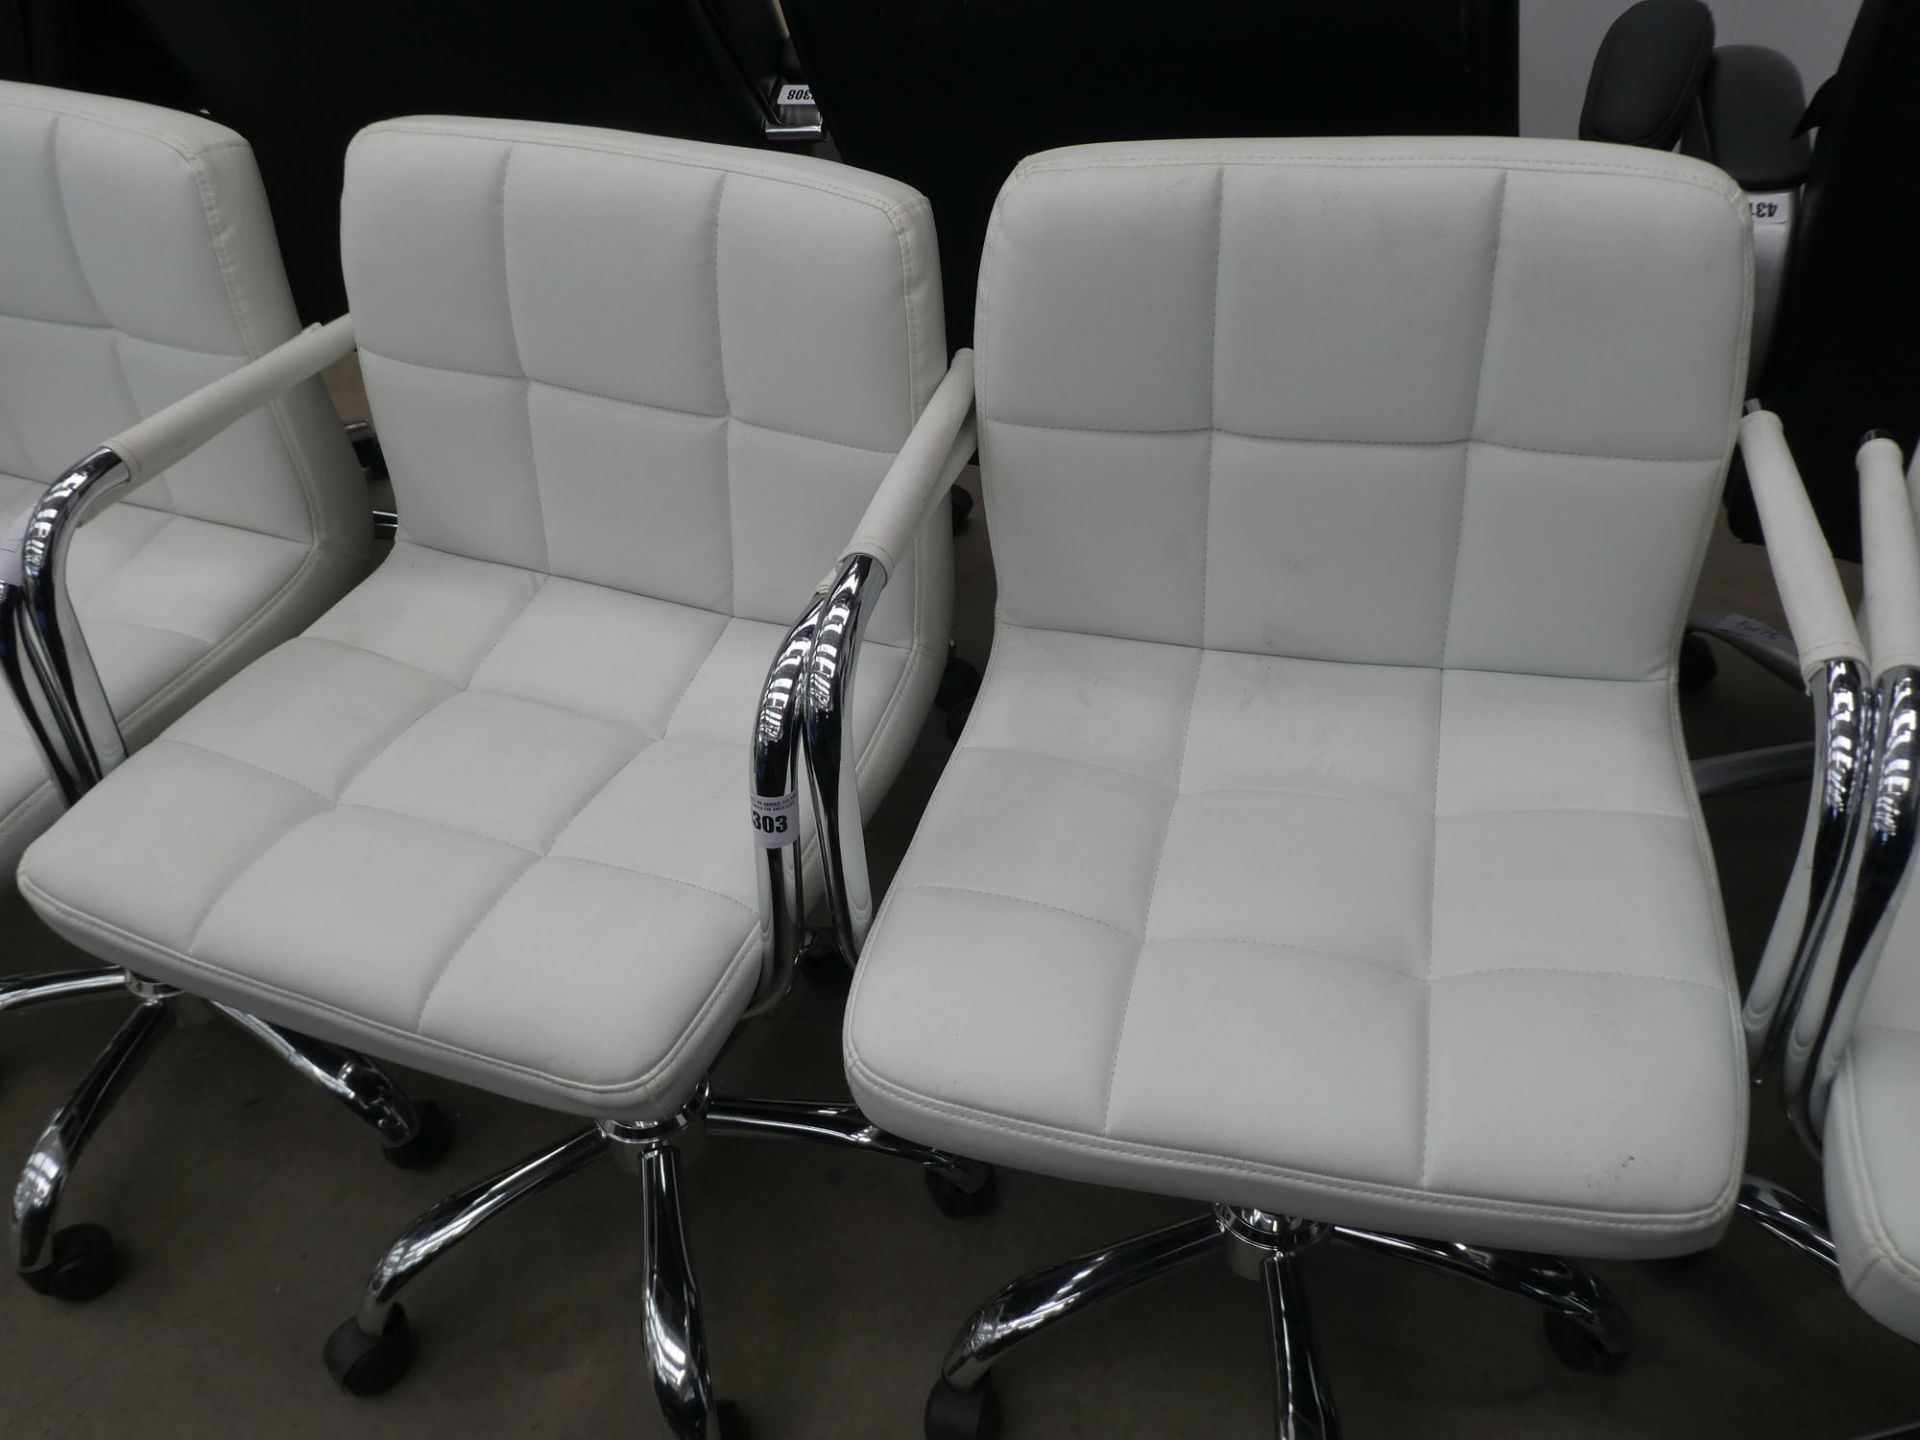 2 white chrome framed armchairs